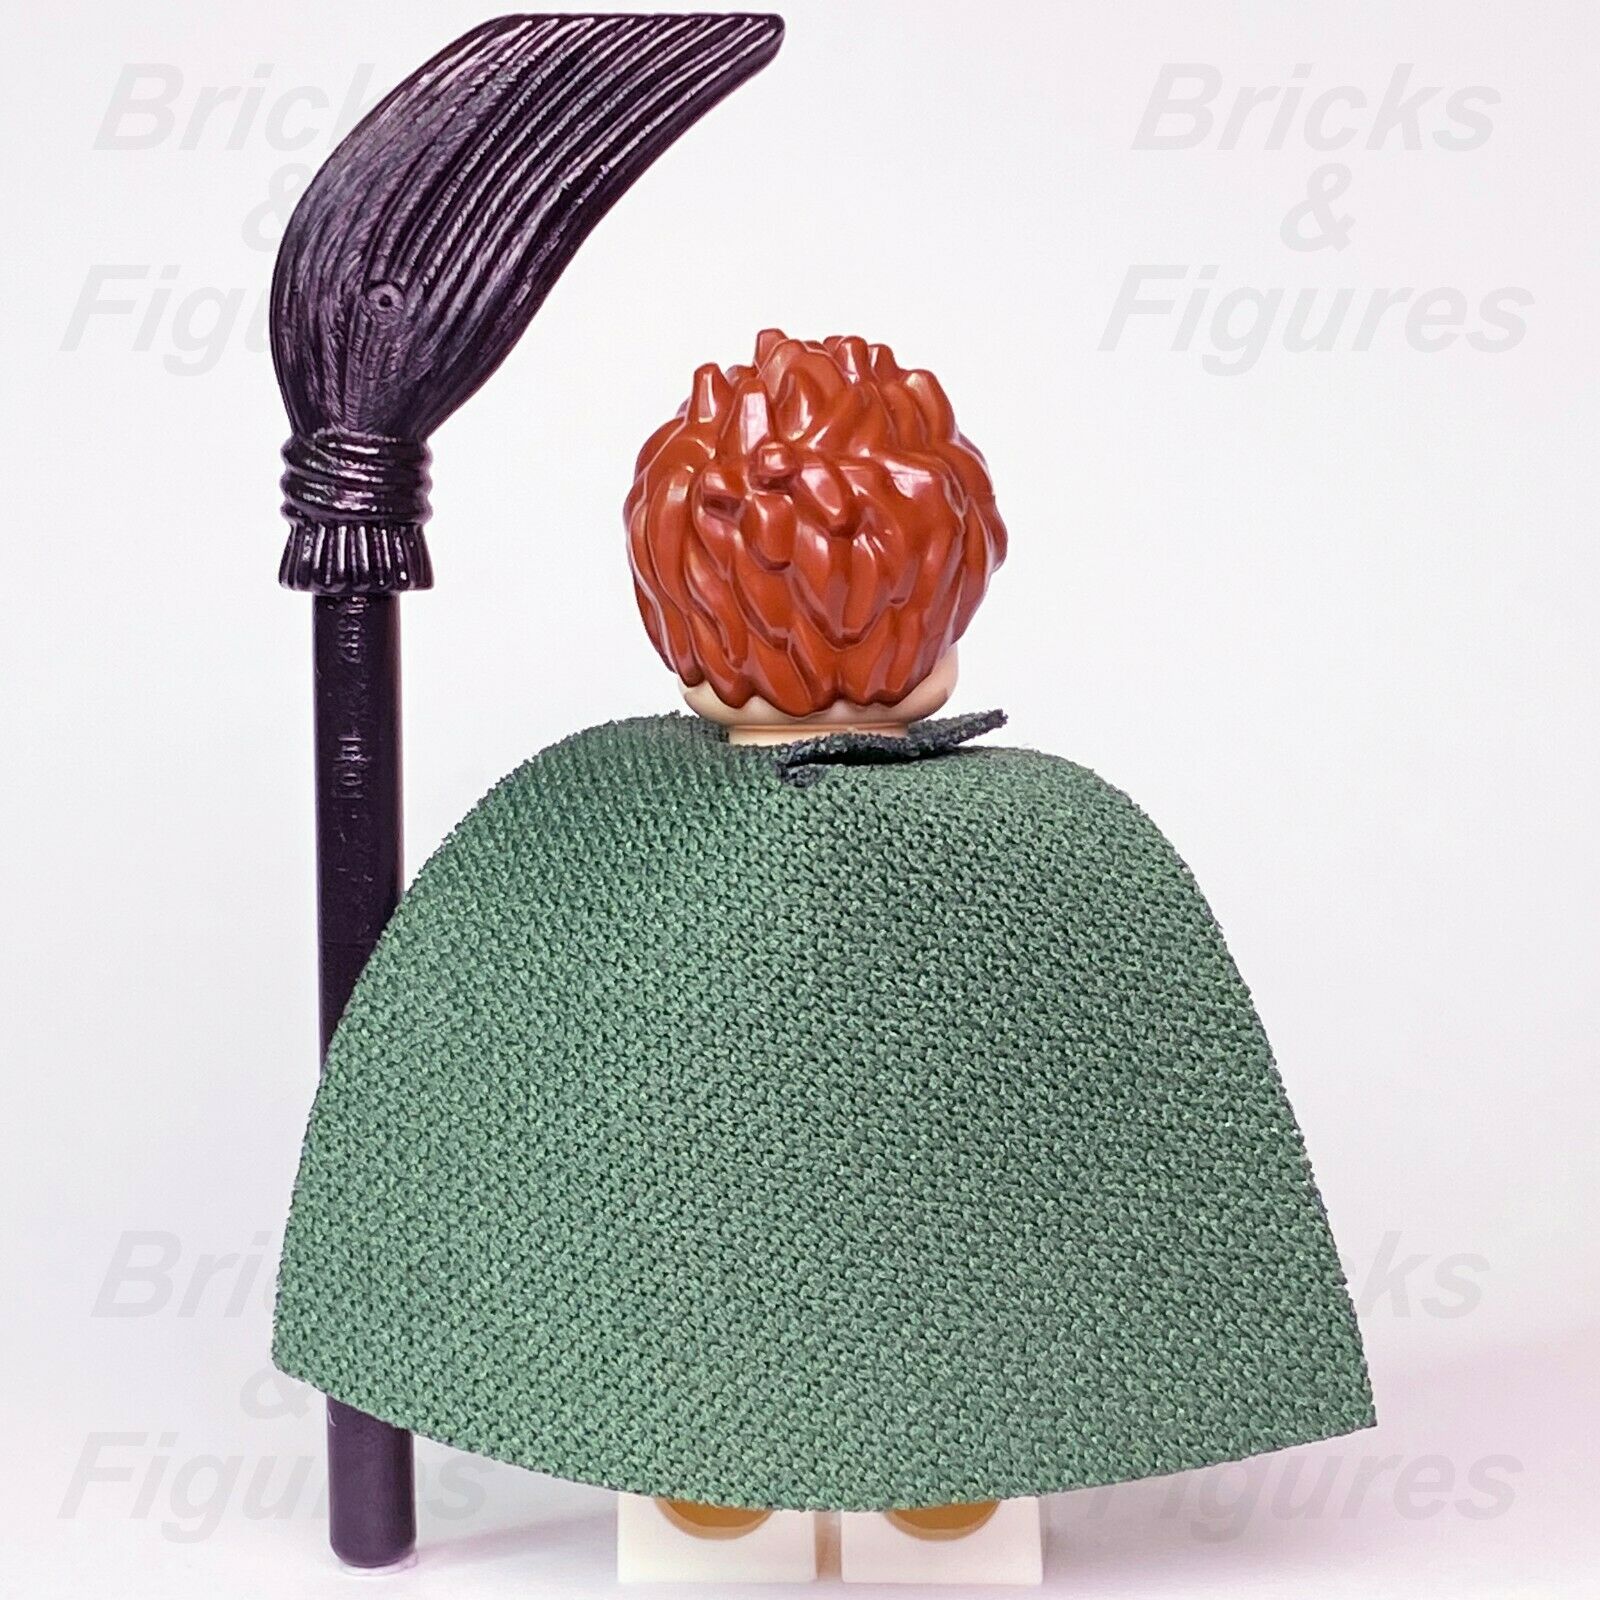 New Harry Potter LEGO® Lucian Bole Quidditch Uniform Wizard Minifigure 75956 - Bricks & Figures